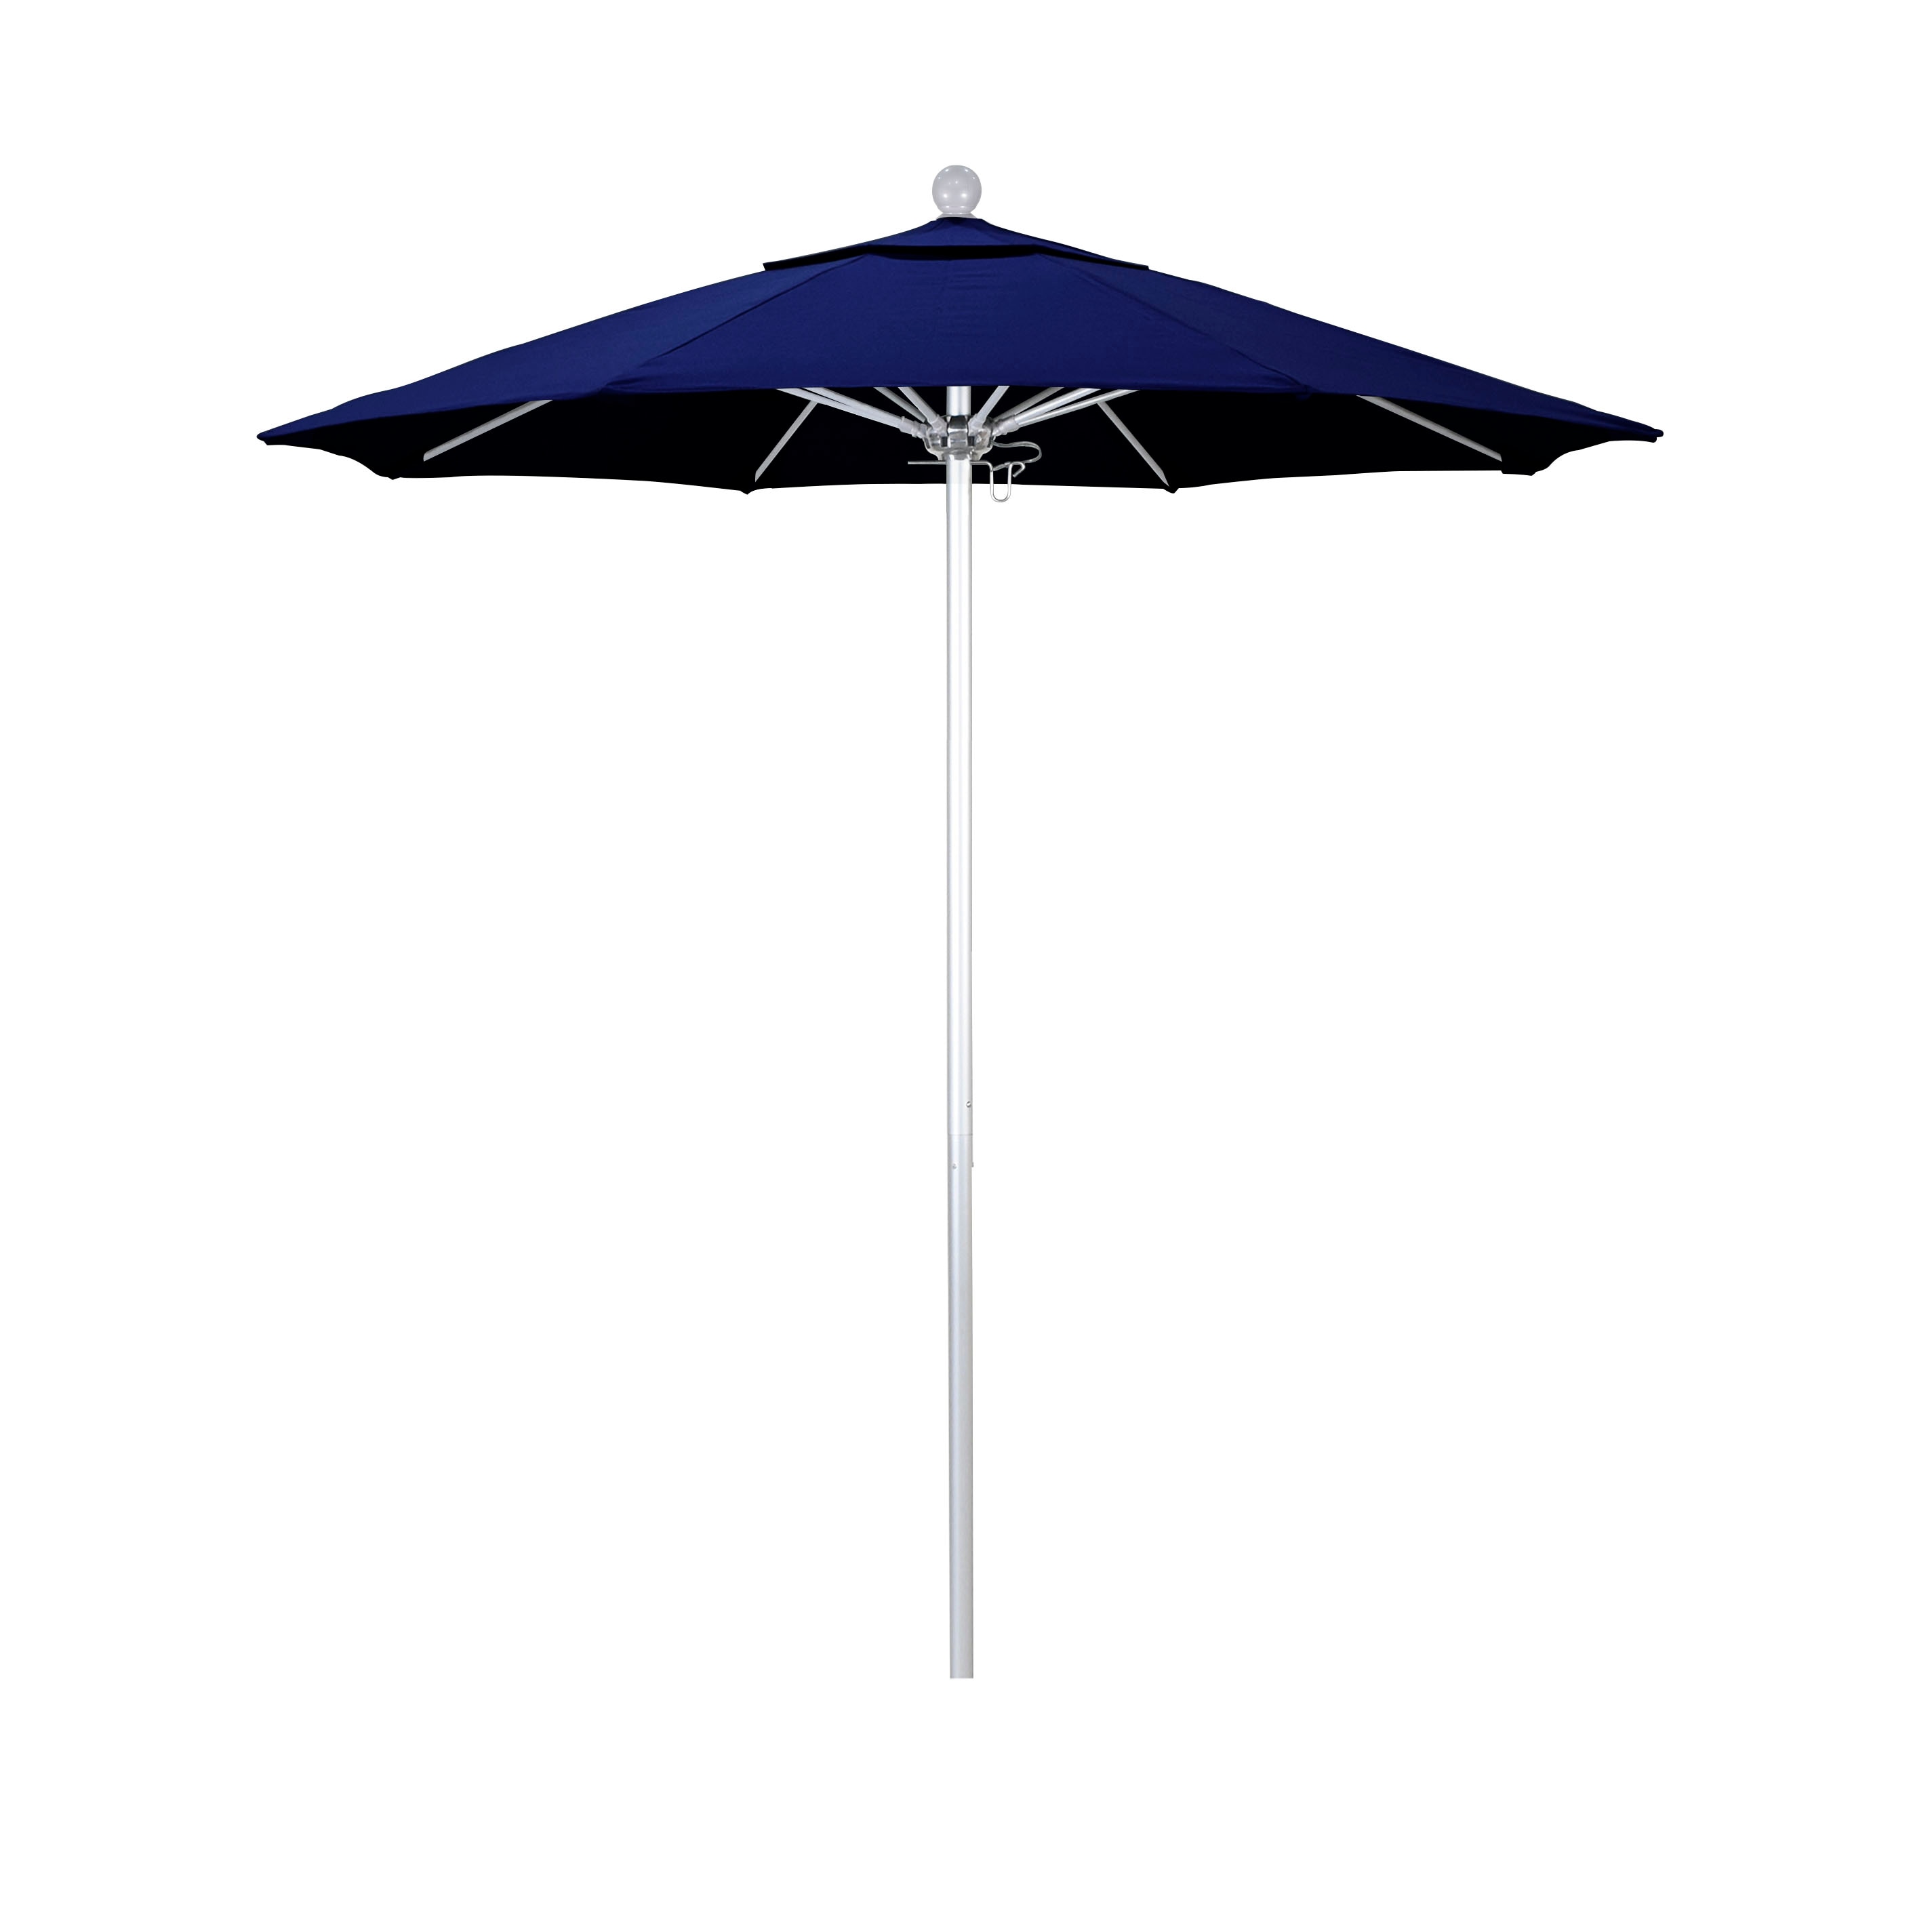 7.5 Ft Round Umbrella Canopy by Sunbrella in Spectrum Daffodil. 